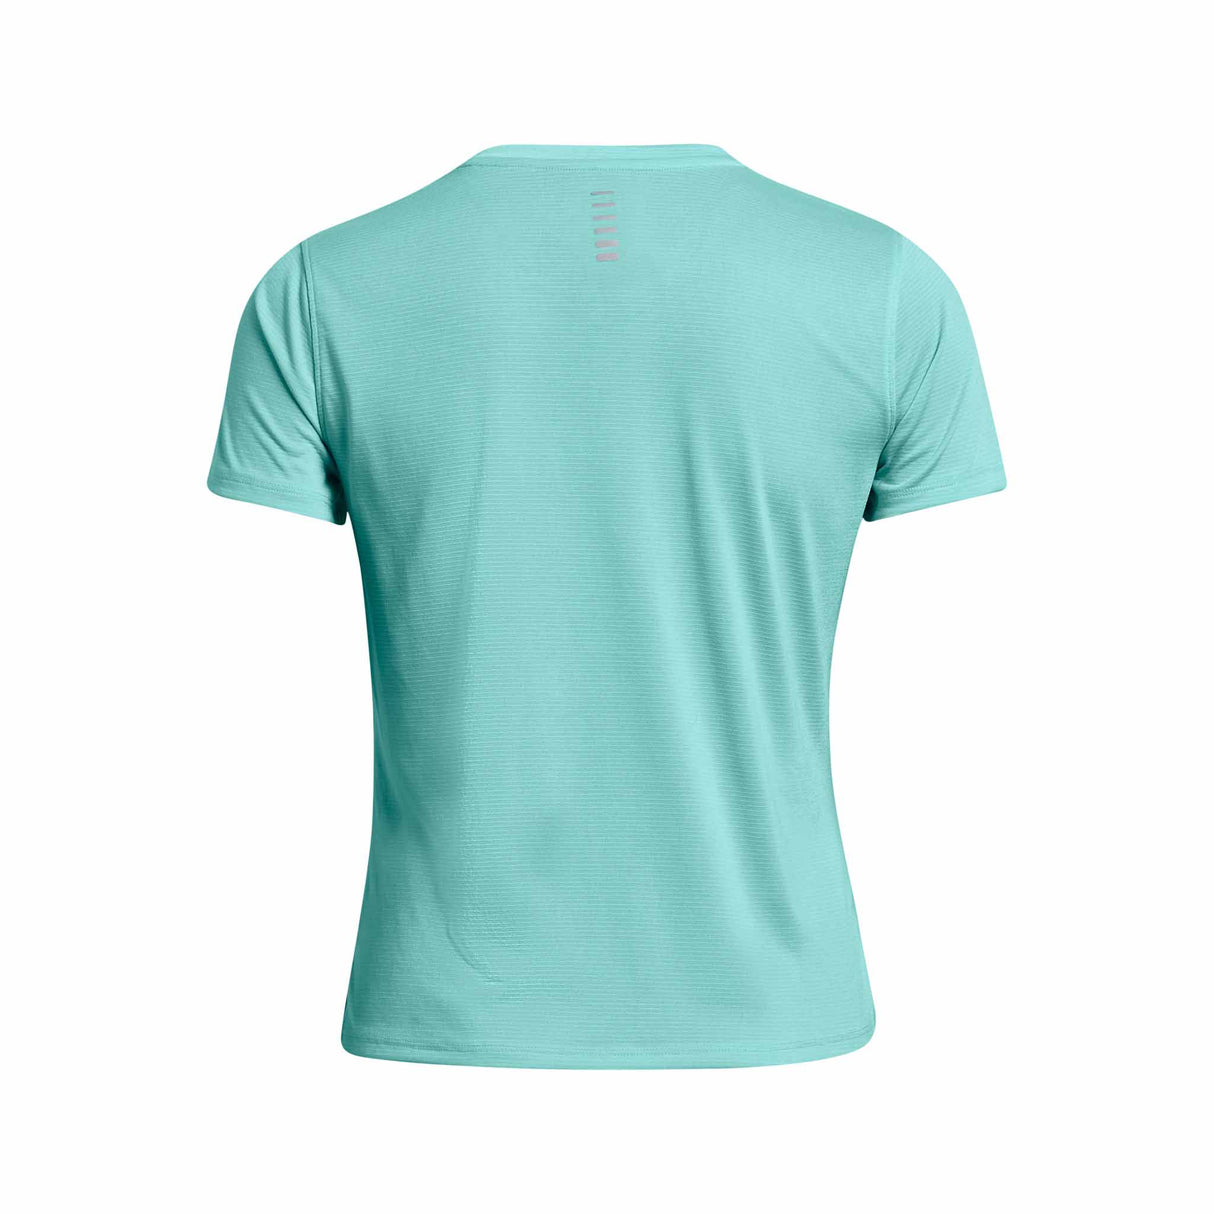 Under Armour Launch t-shirt à manches courtes femme dos- Radial Turquoise / Reflective